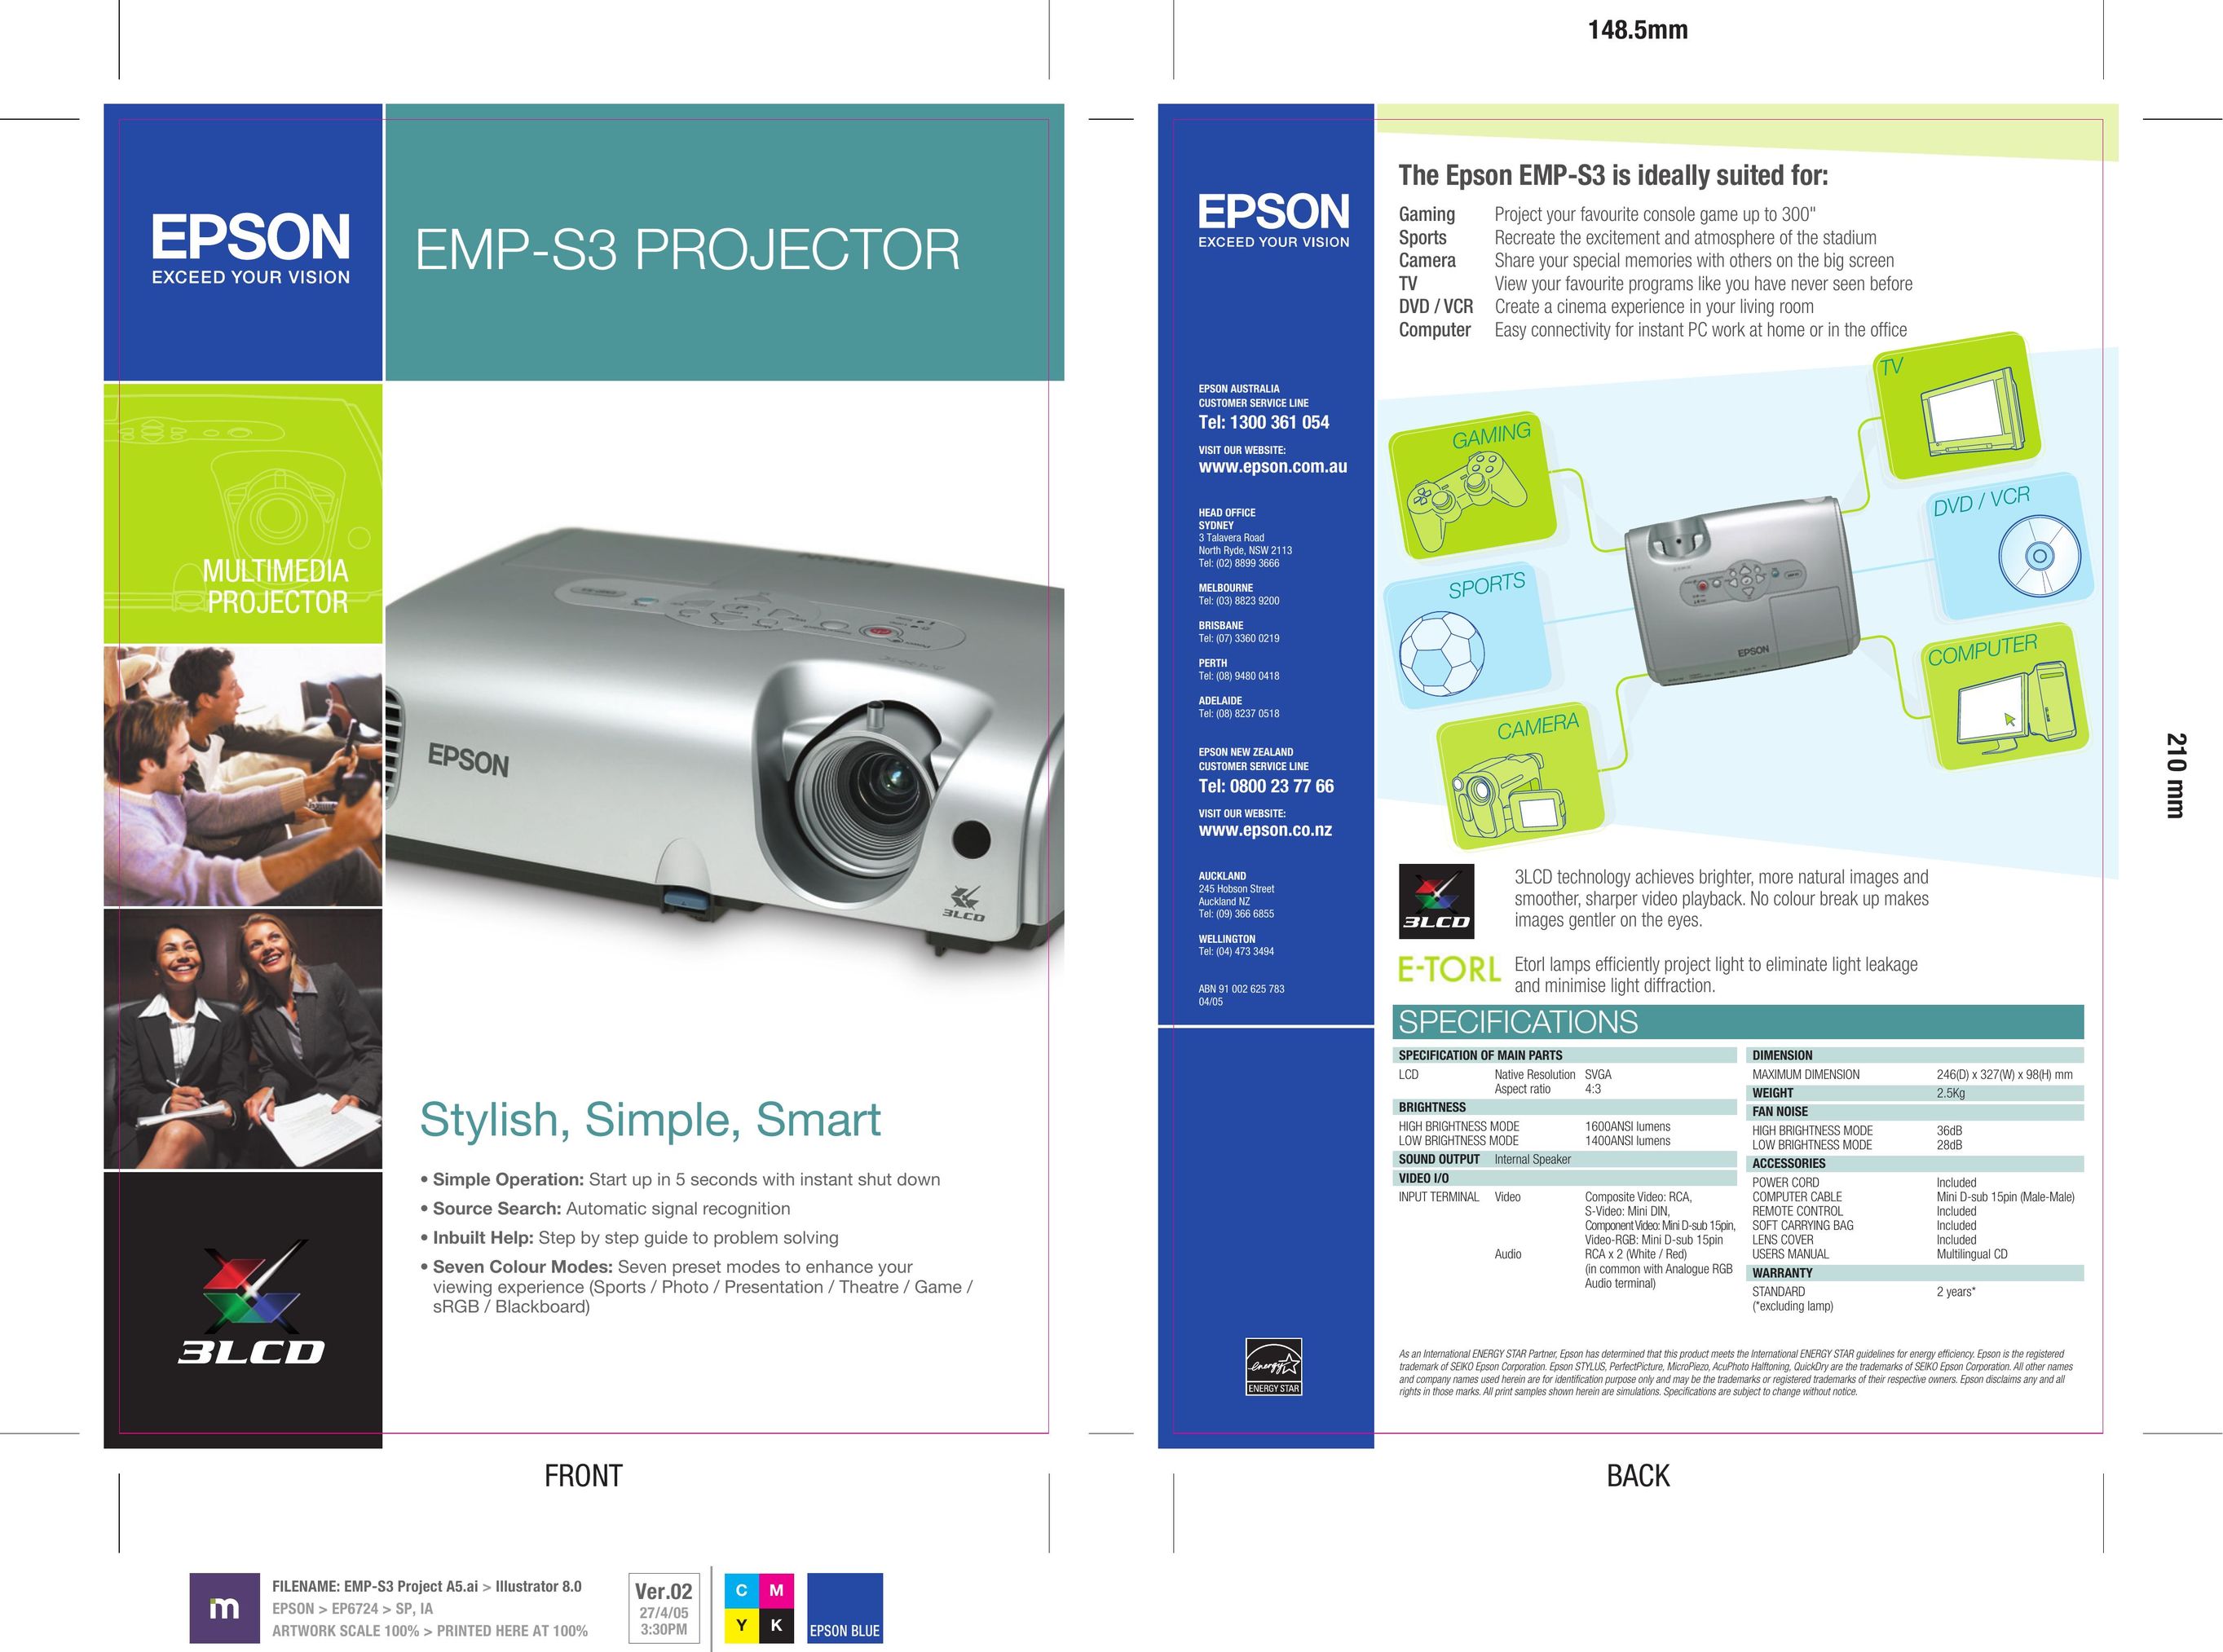 Seiko Group EMP-S3 Projector User Manual